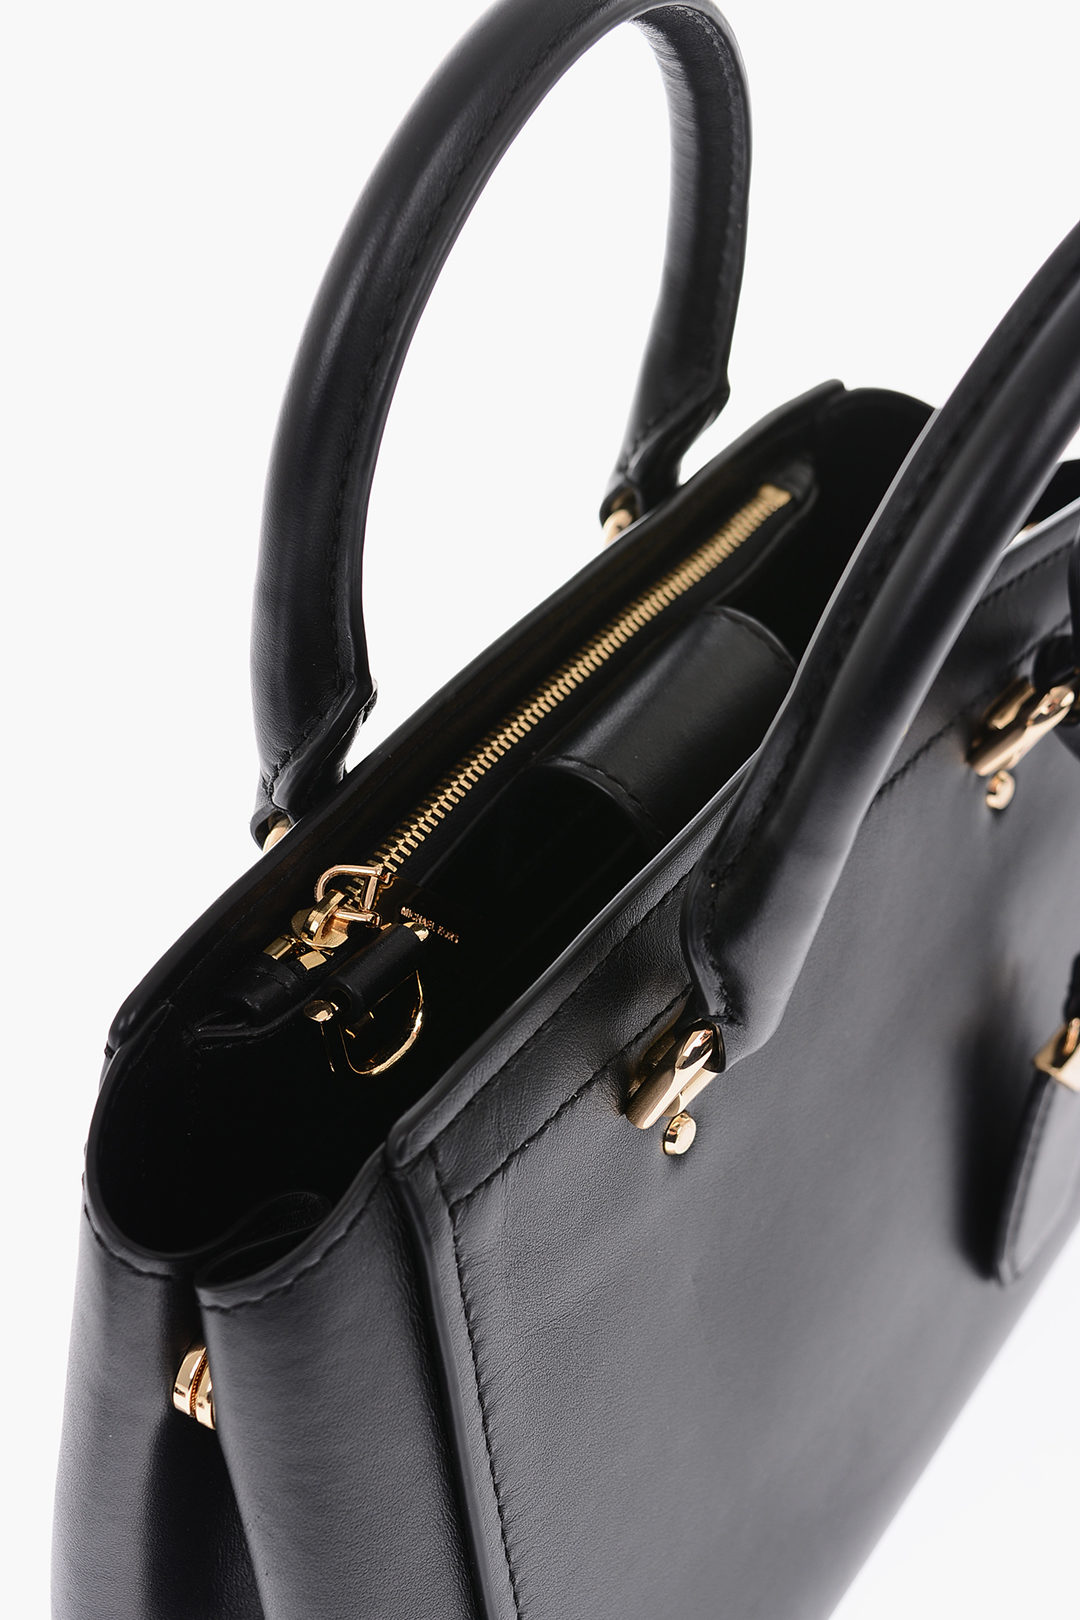 Michael Kors MICHAEL leather BENNING Bowler Bag women - Glamood Outlet